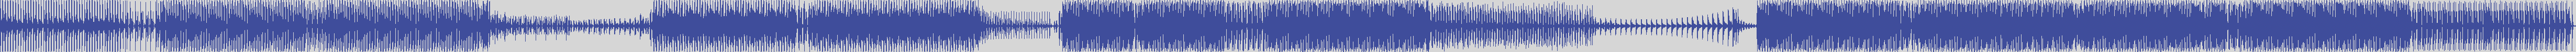 atomic_recordings [AR018] Kenny Ground - White Shadows [Original Mix] audio wave form